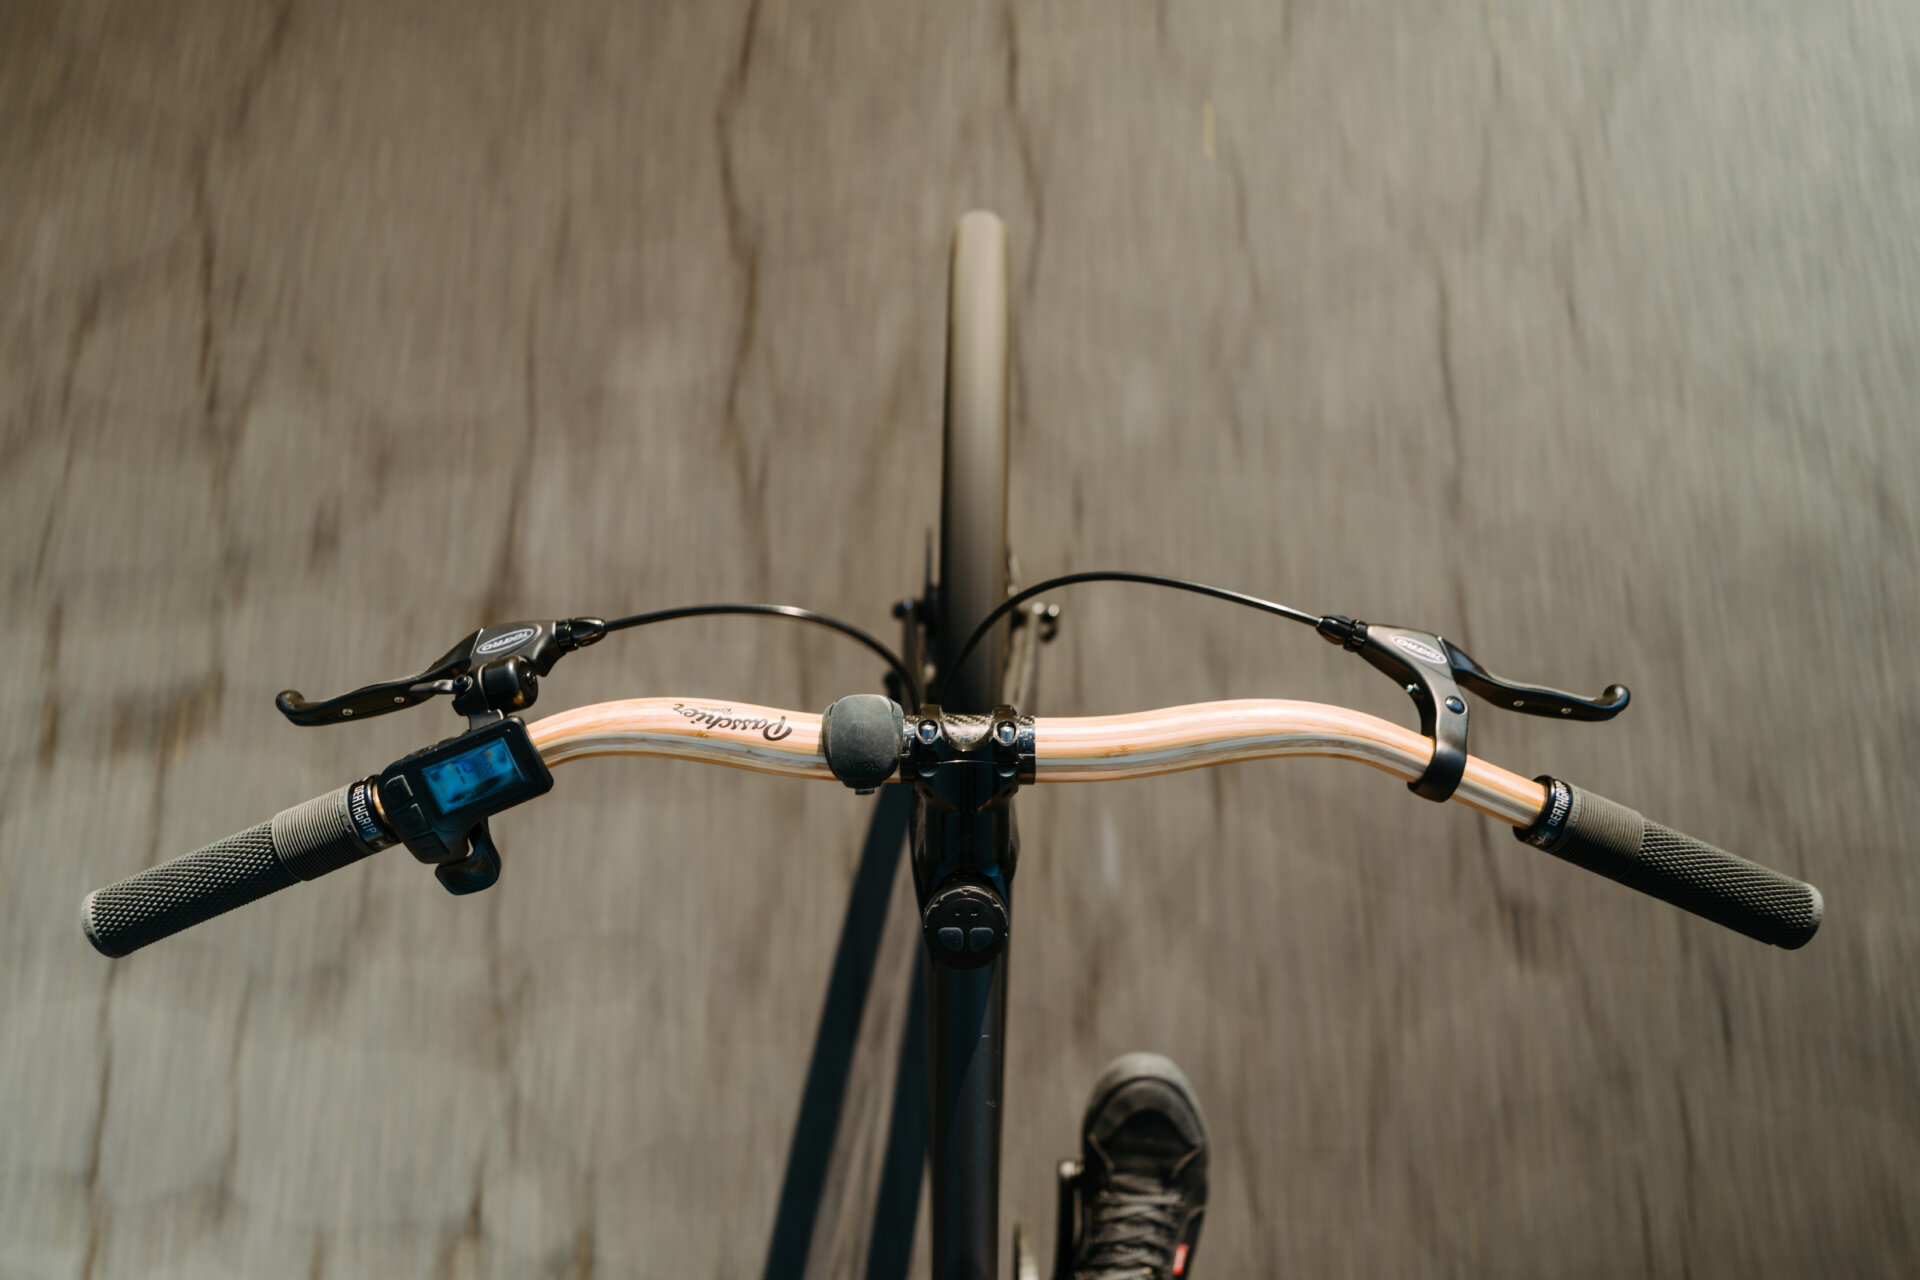 “Bamboo handlebars for ultimate flex and comfort” – Electric Bike Journal